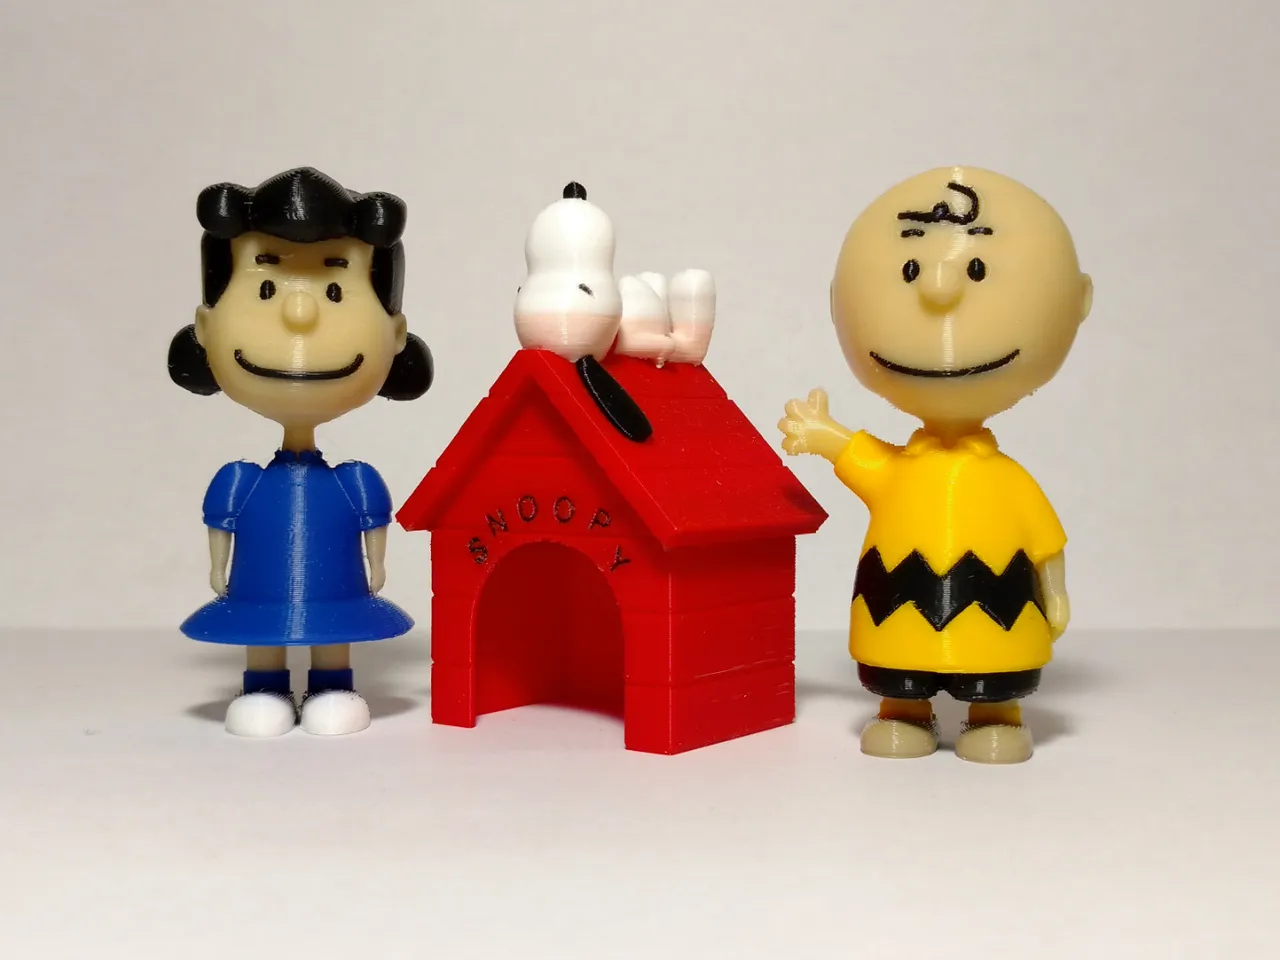 peanuts characters lucy van pelt